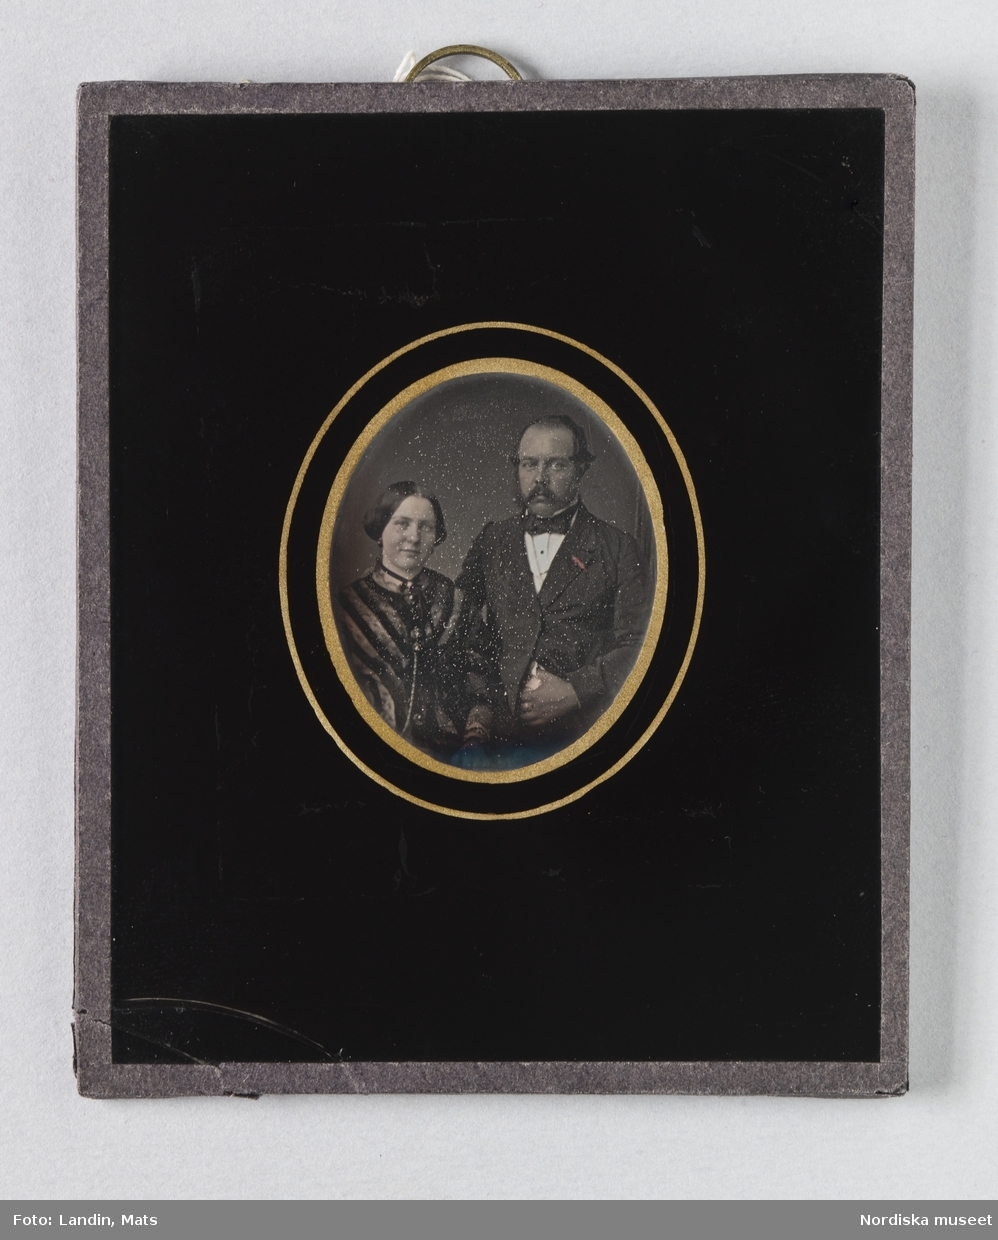 Porträtt av okänt par, dagerrotyp / daguerreotyp, 1850-tal.  Nordiska museet inv.nr 111067.
-
Portrait of unidentified couple, 1850s. Sixteenth-plate daguerreotype.